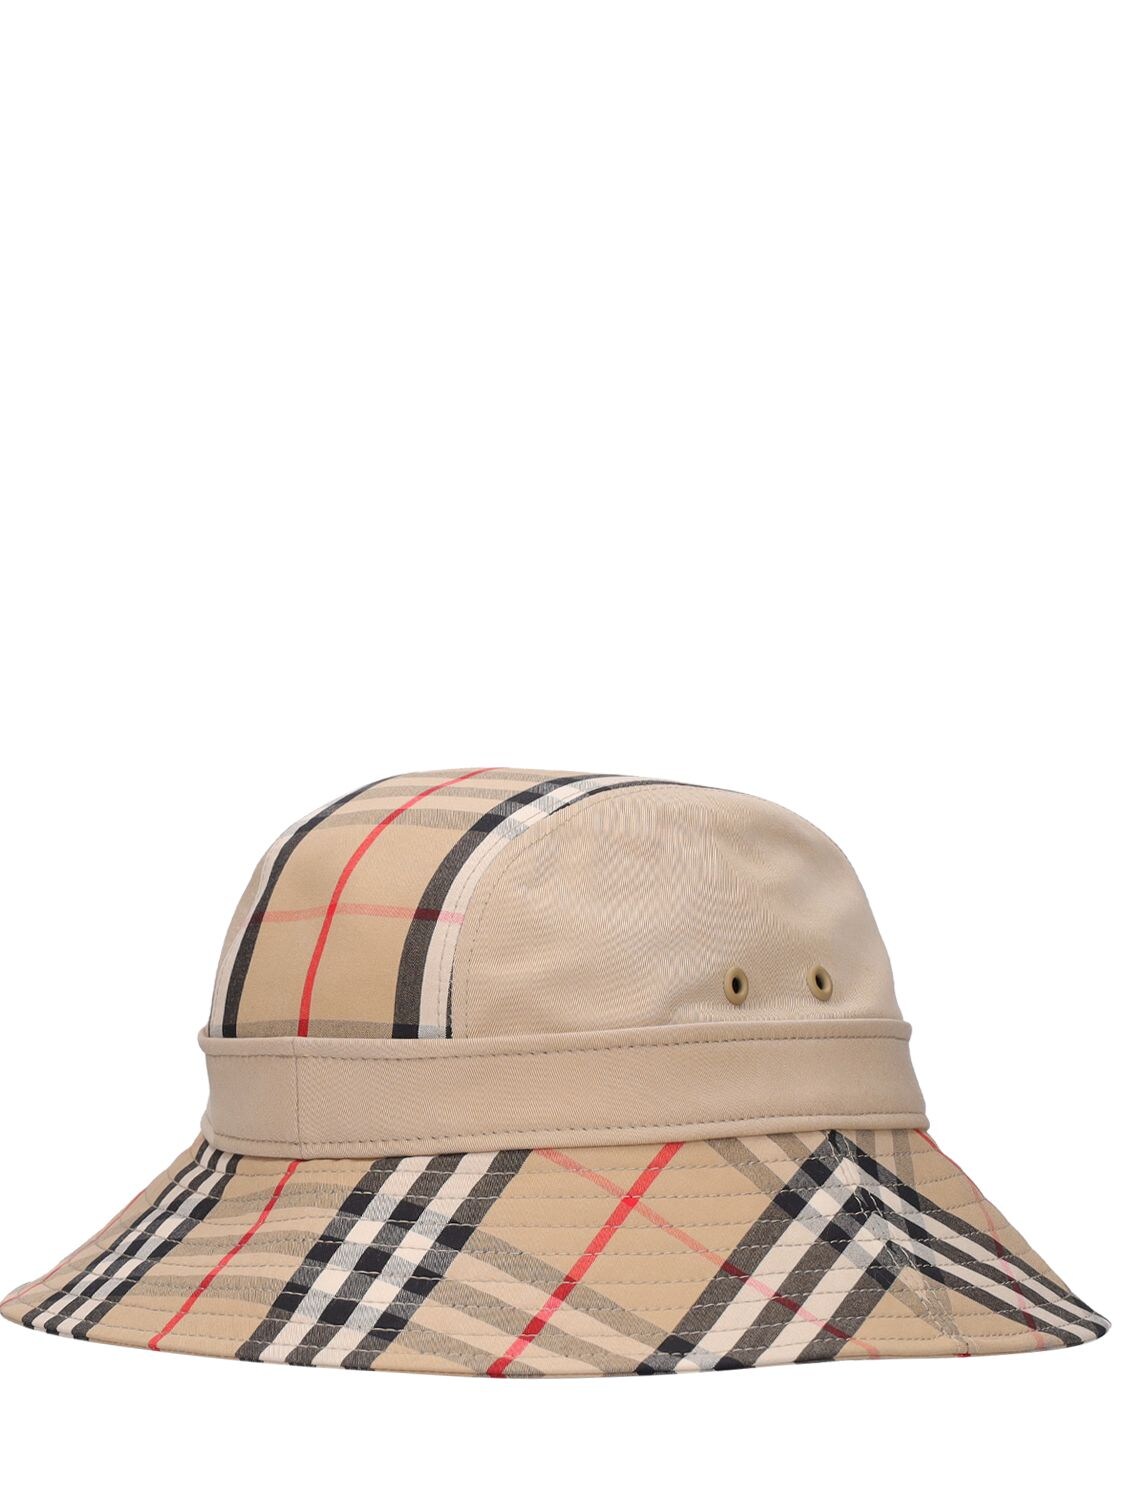 Burberry Kids Reversible Check Bucket Hat